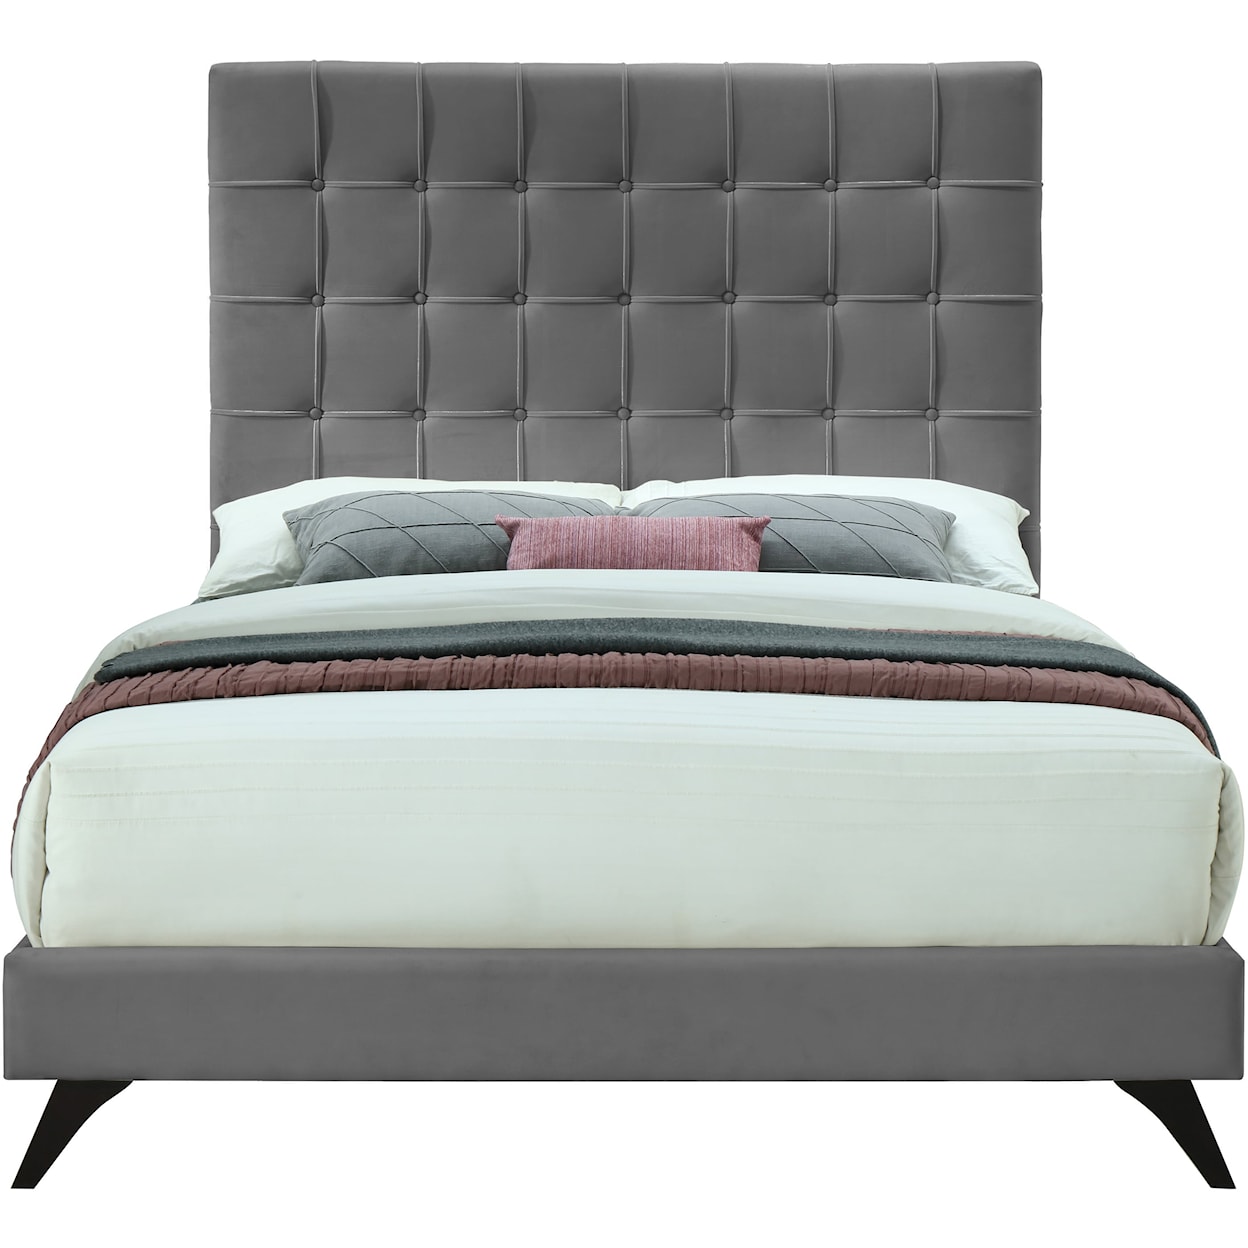 Meridian Furniture Elly Queen Bed